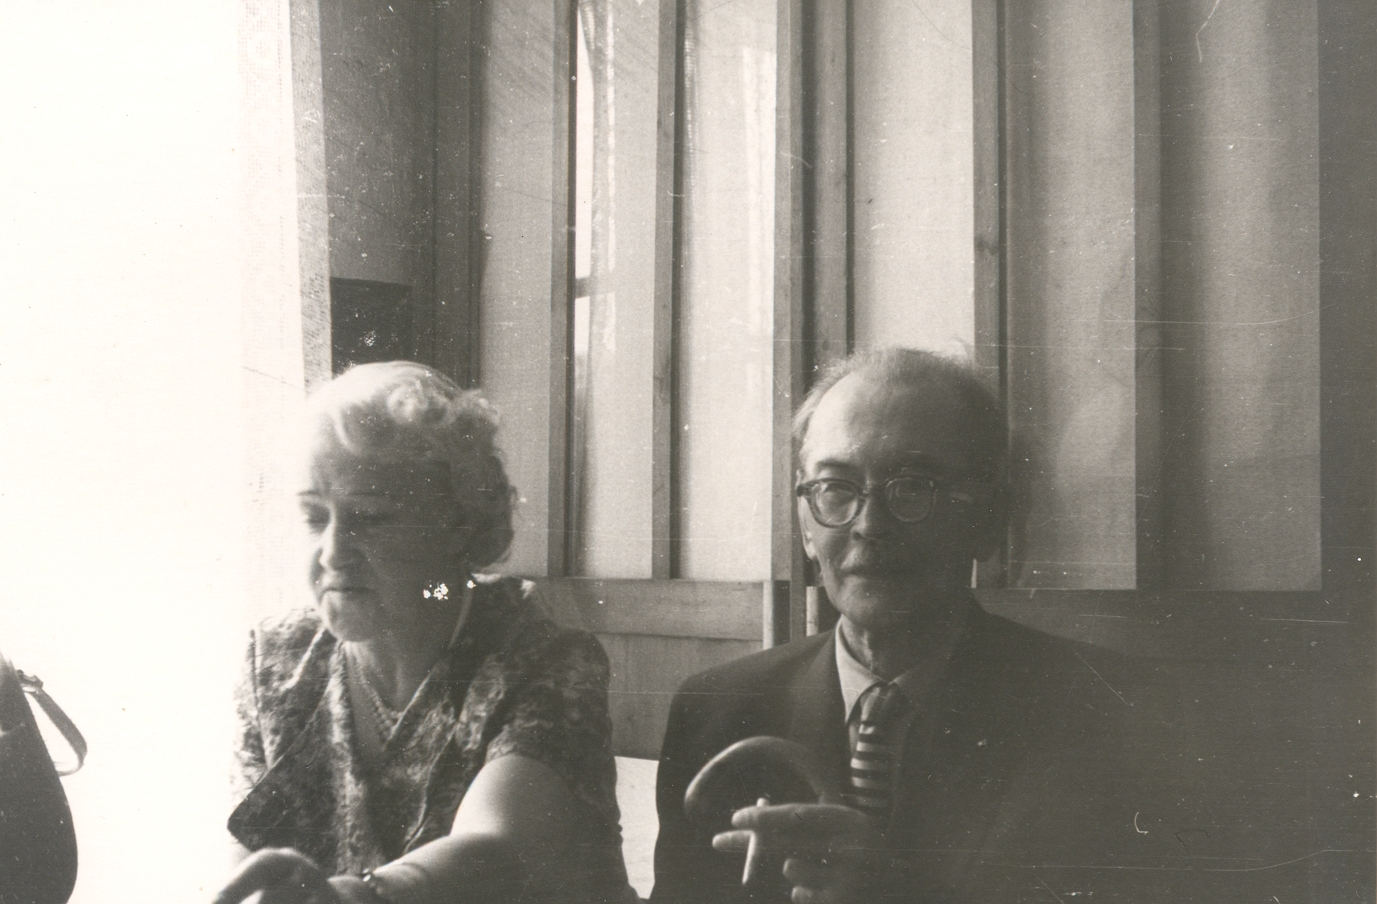 Elo and Friedebert in Tugla, Ahja High School Teacher Room in 1963.